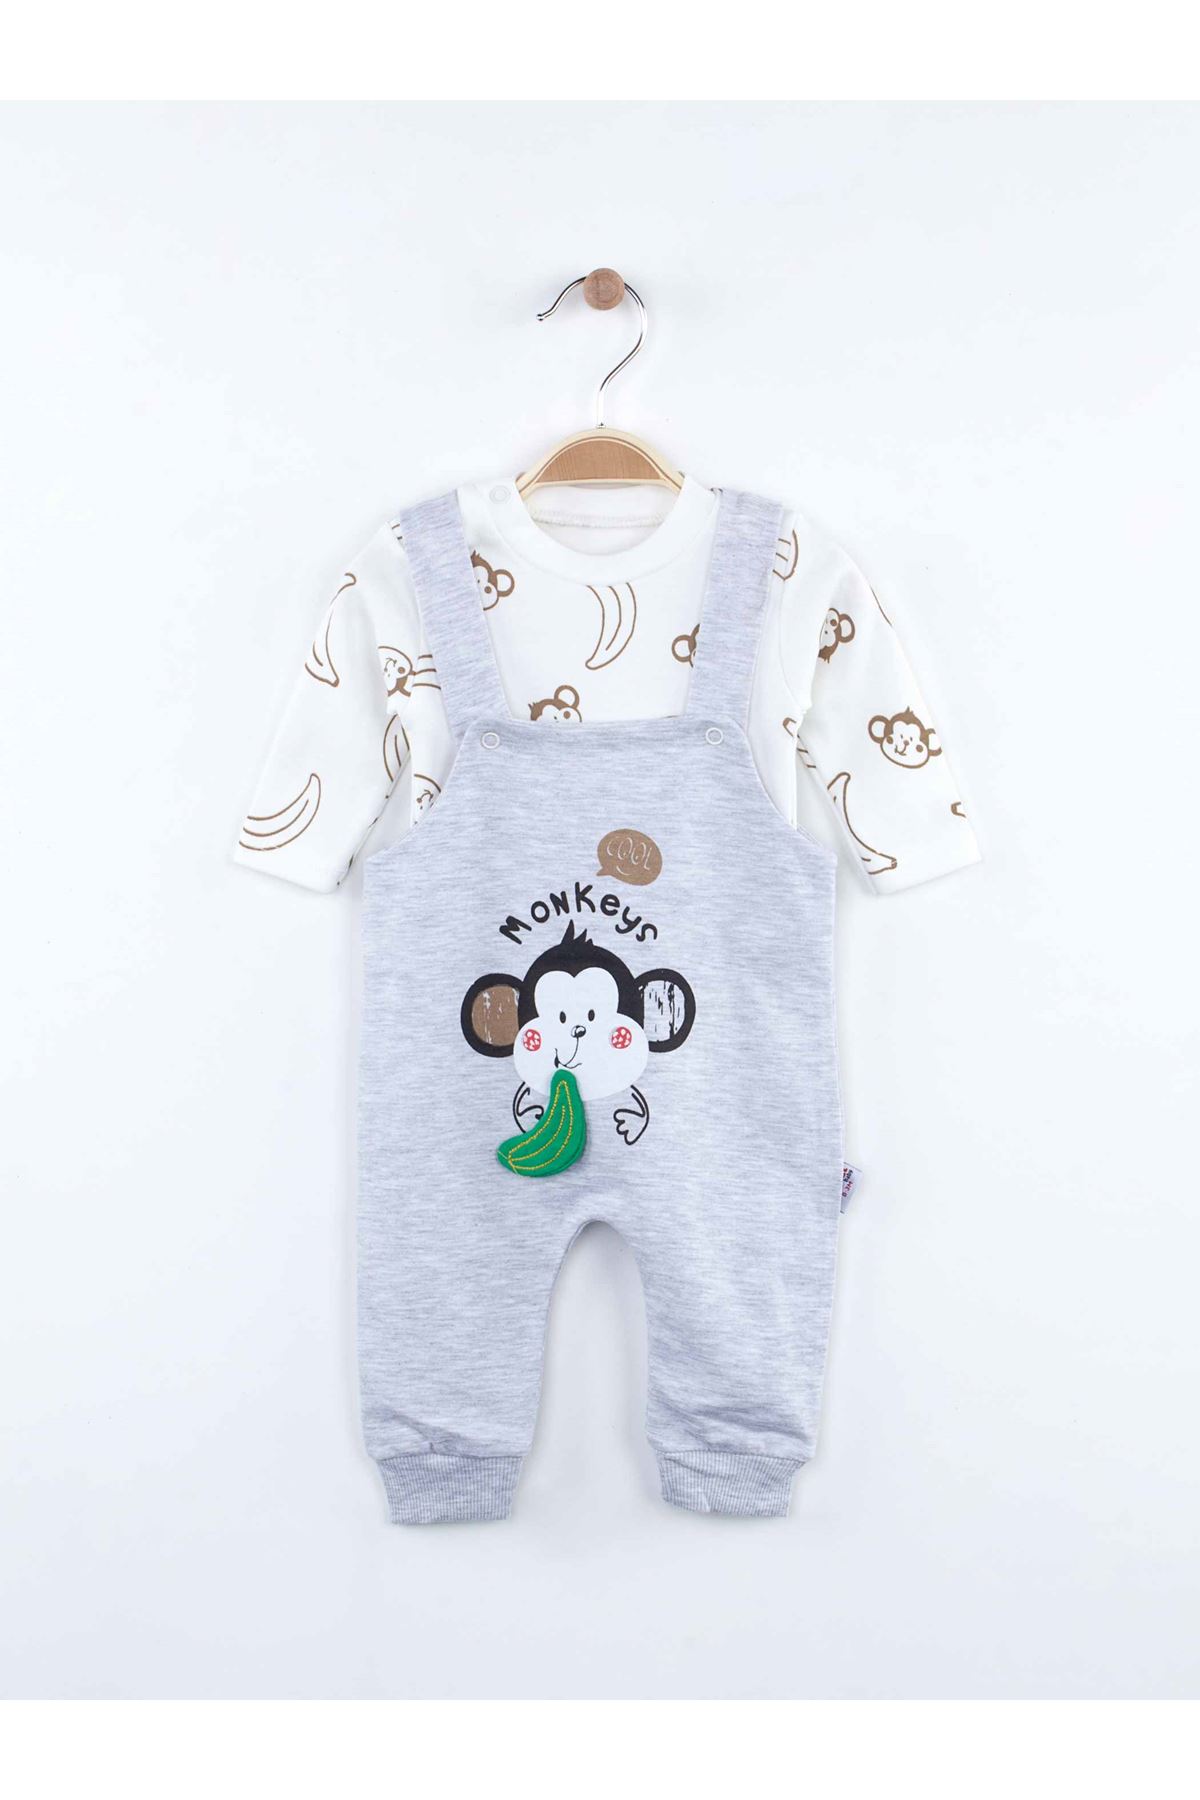 Gray Monkey Printed Baby Boy Salopet Jumpsuit